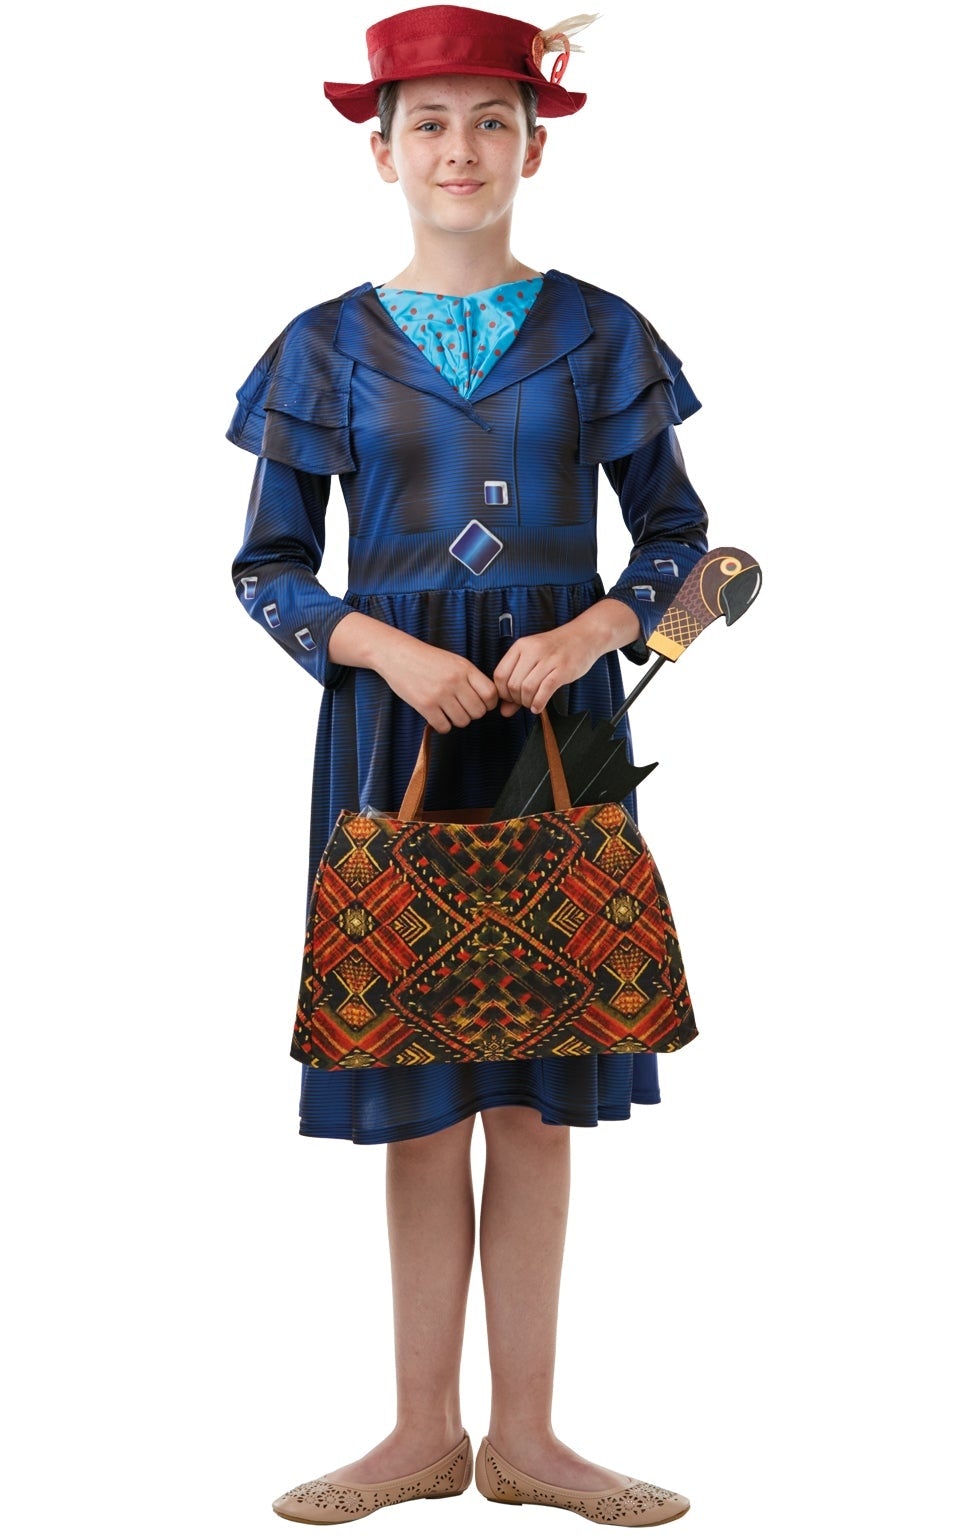 Mary Poppins Returns Costume_2 rub-6406501112